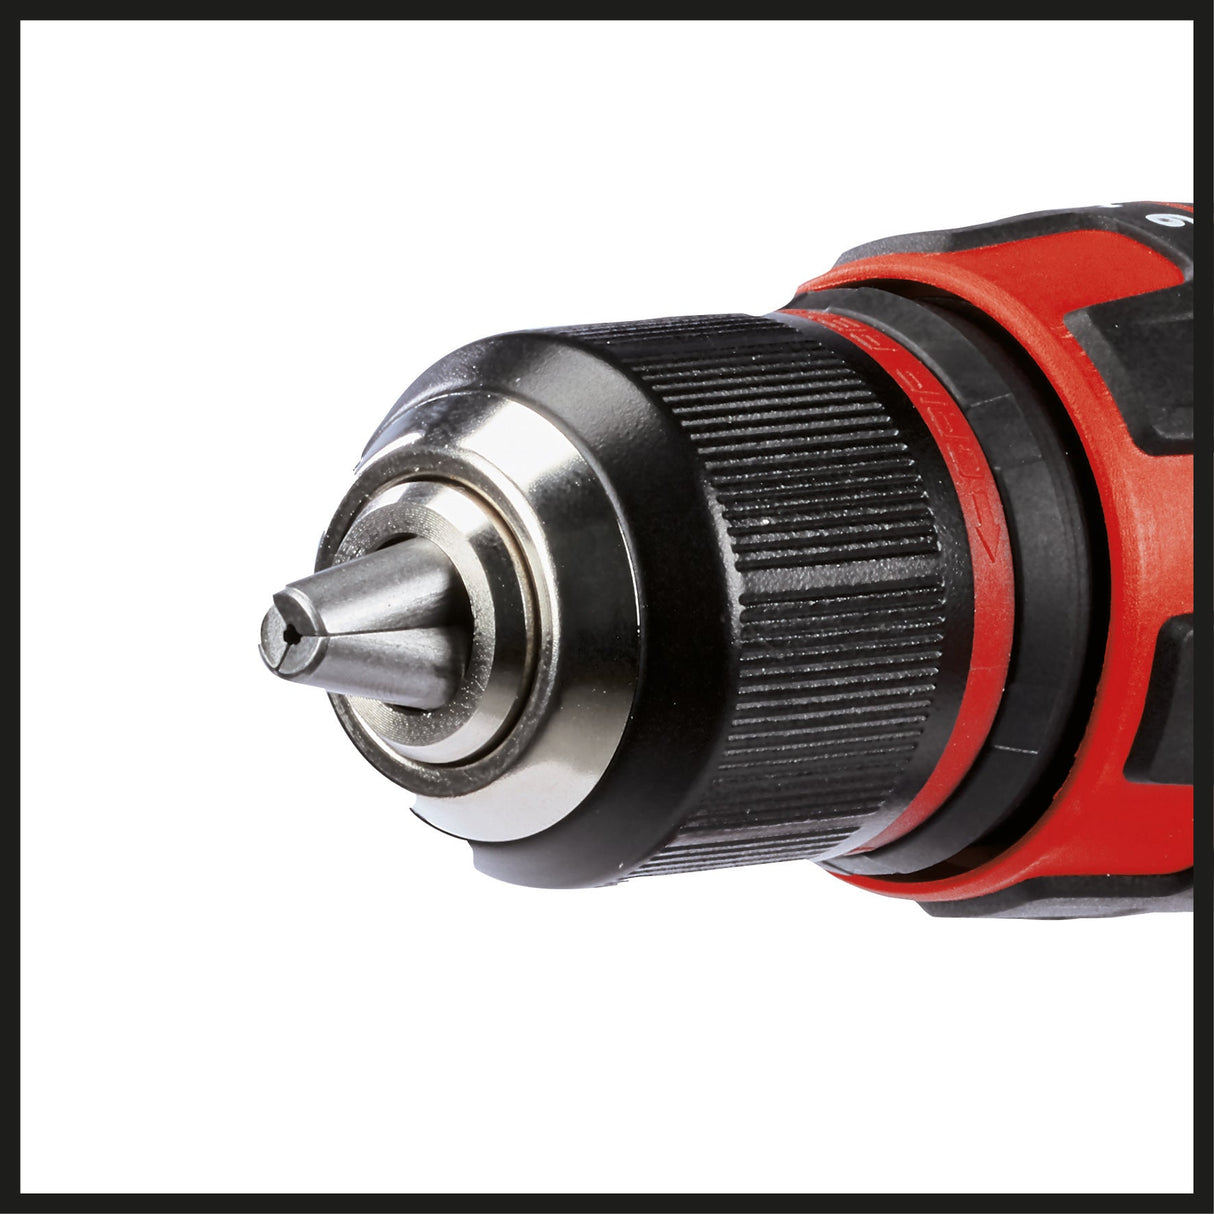 Einhell Power Tools 18V 1/2” Cordless Hammer Drill Driver